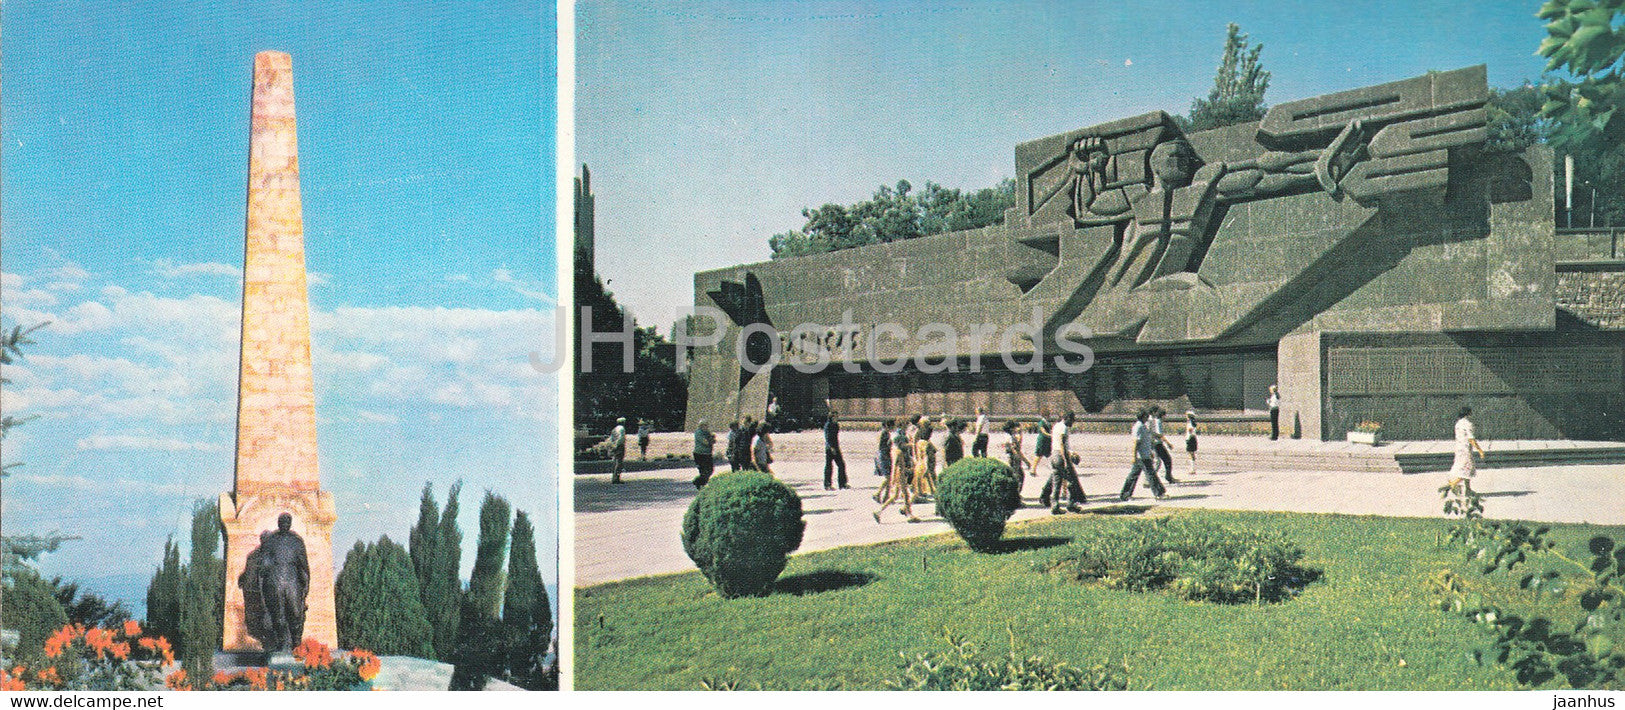 Sevastopol - monument to the soldiers of the 414th Georgian division - memorial - Crimea - 1980 - Ukraine USSR - unused - JH Postcards